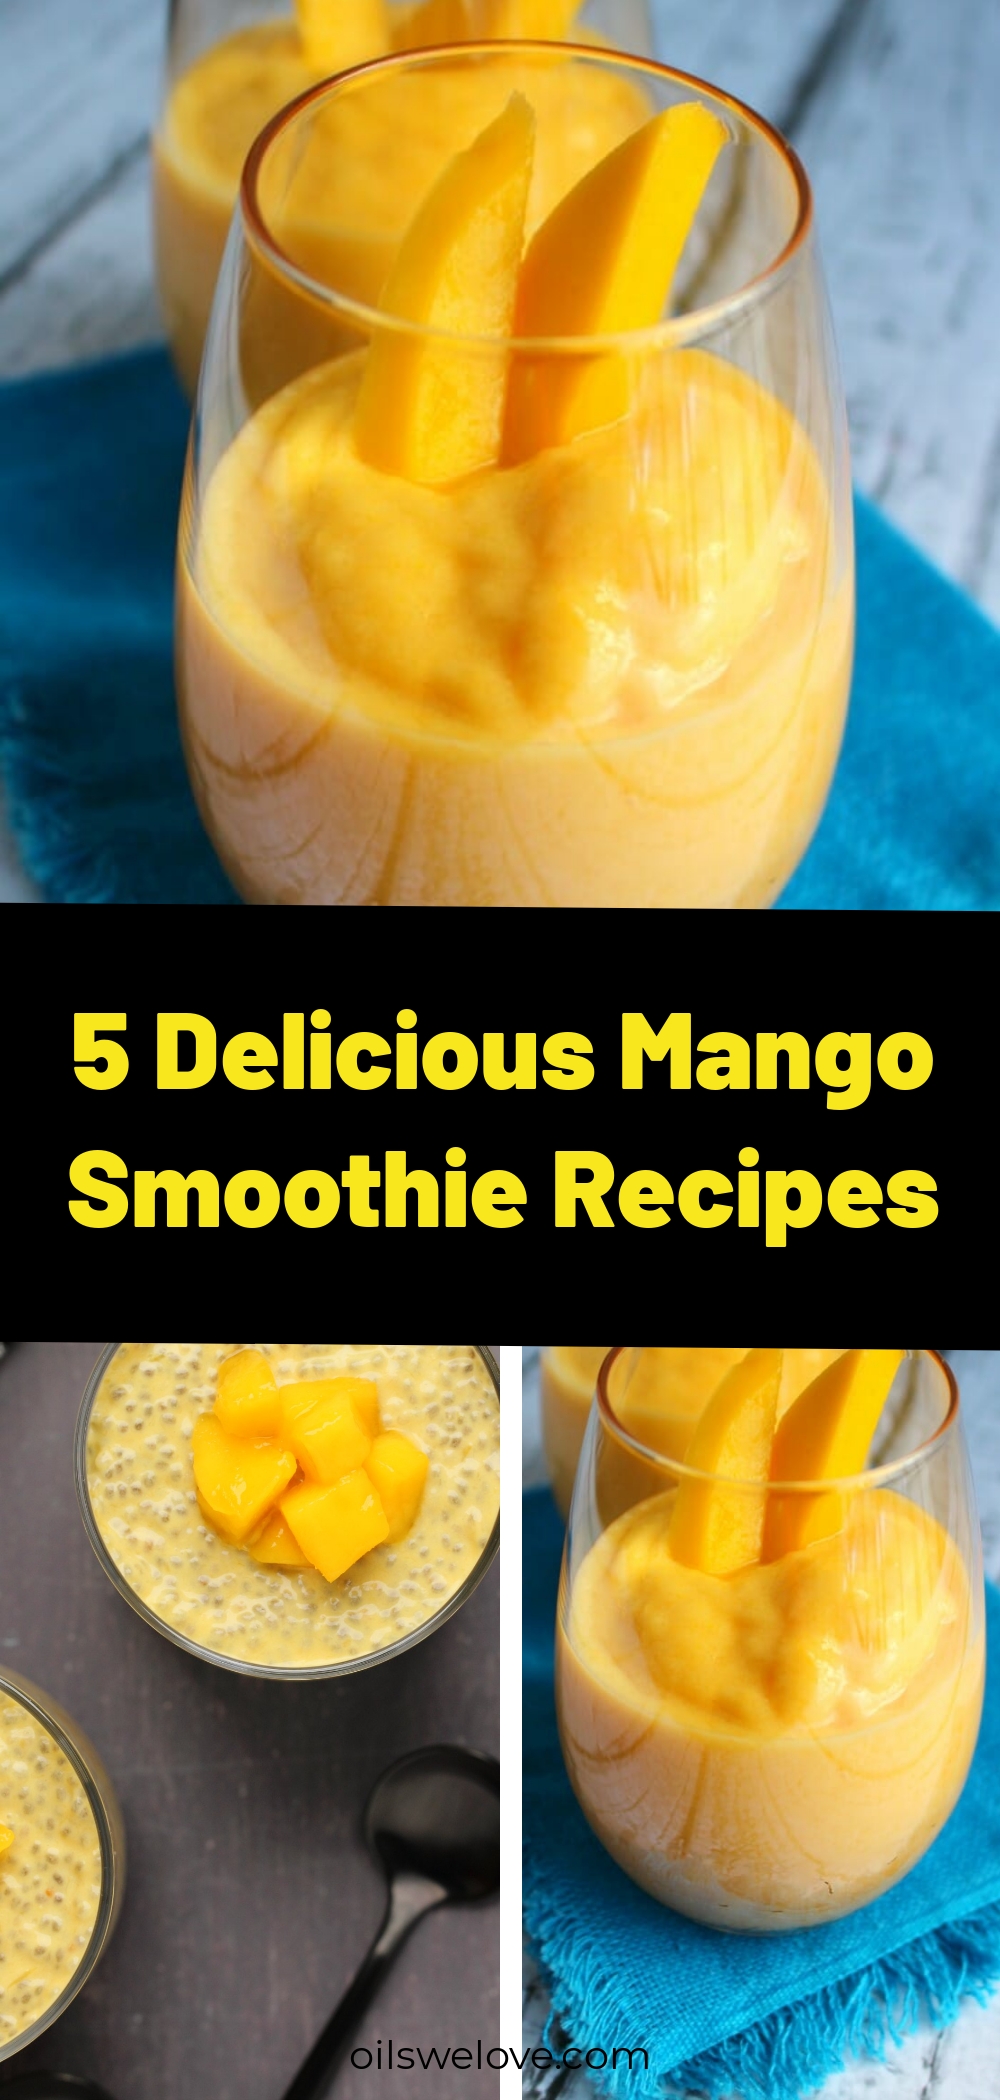 5 Delicious Mango Smoothie Recipes | Oils we love